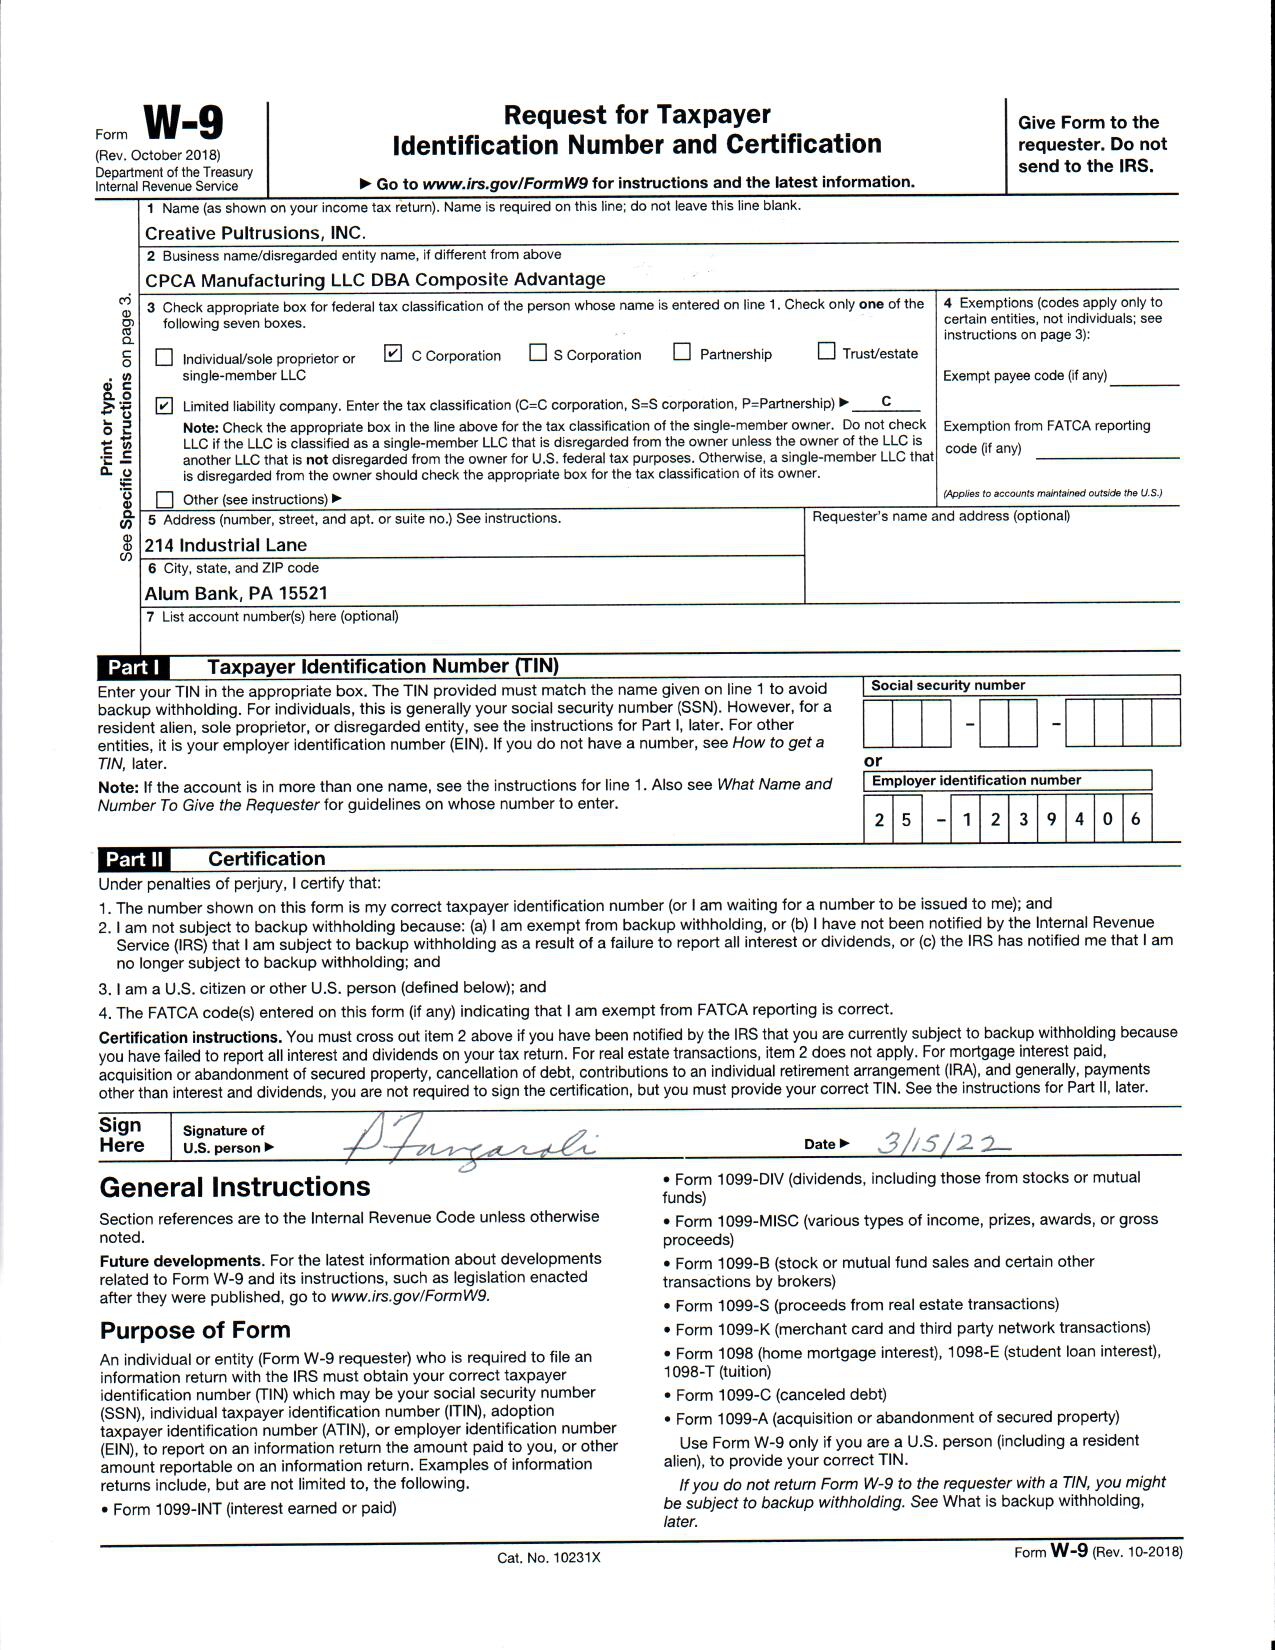 CPCA W-9 Form